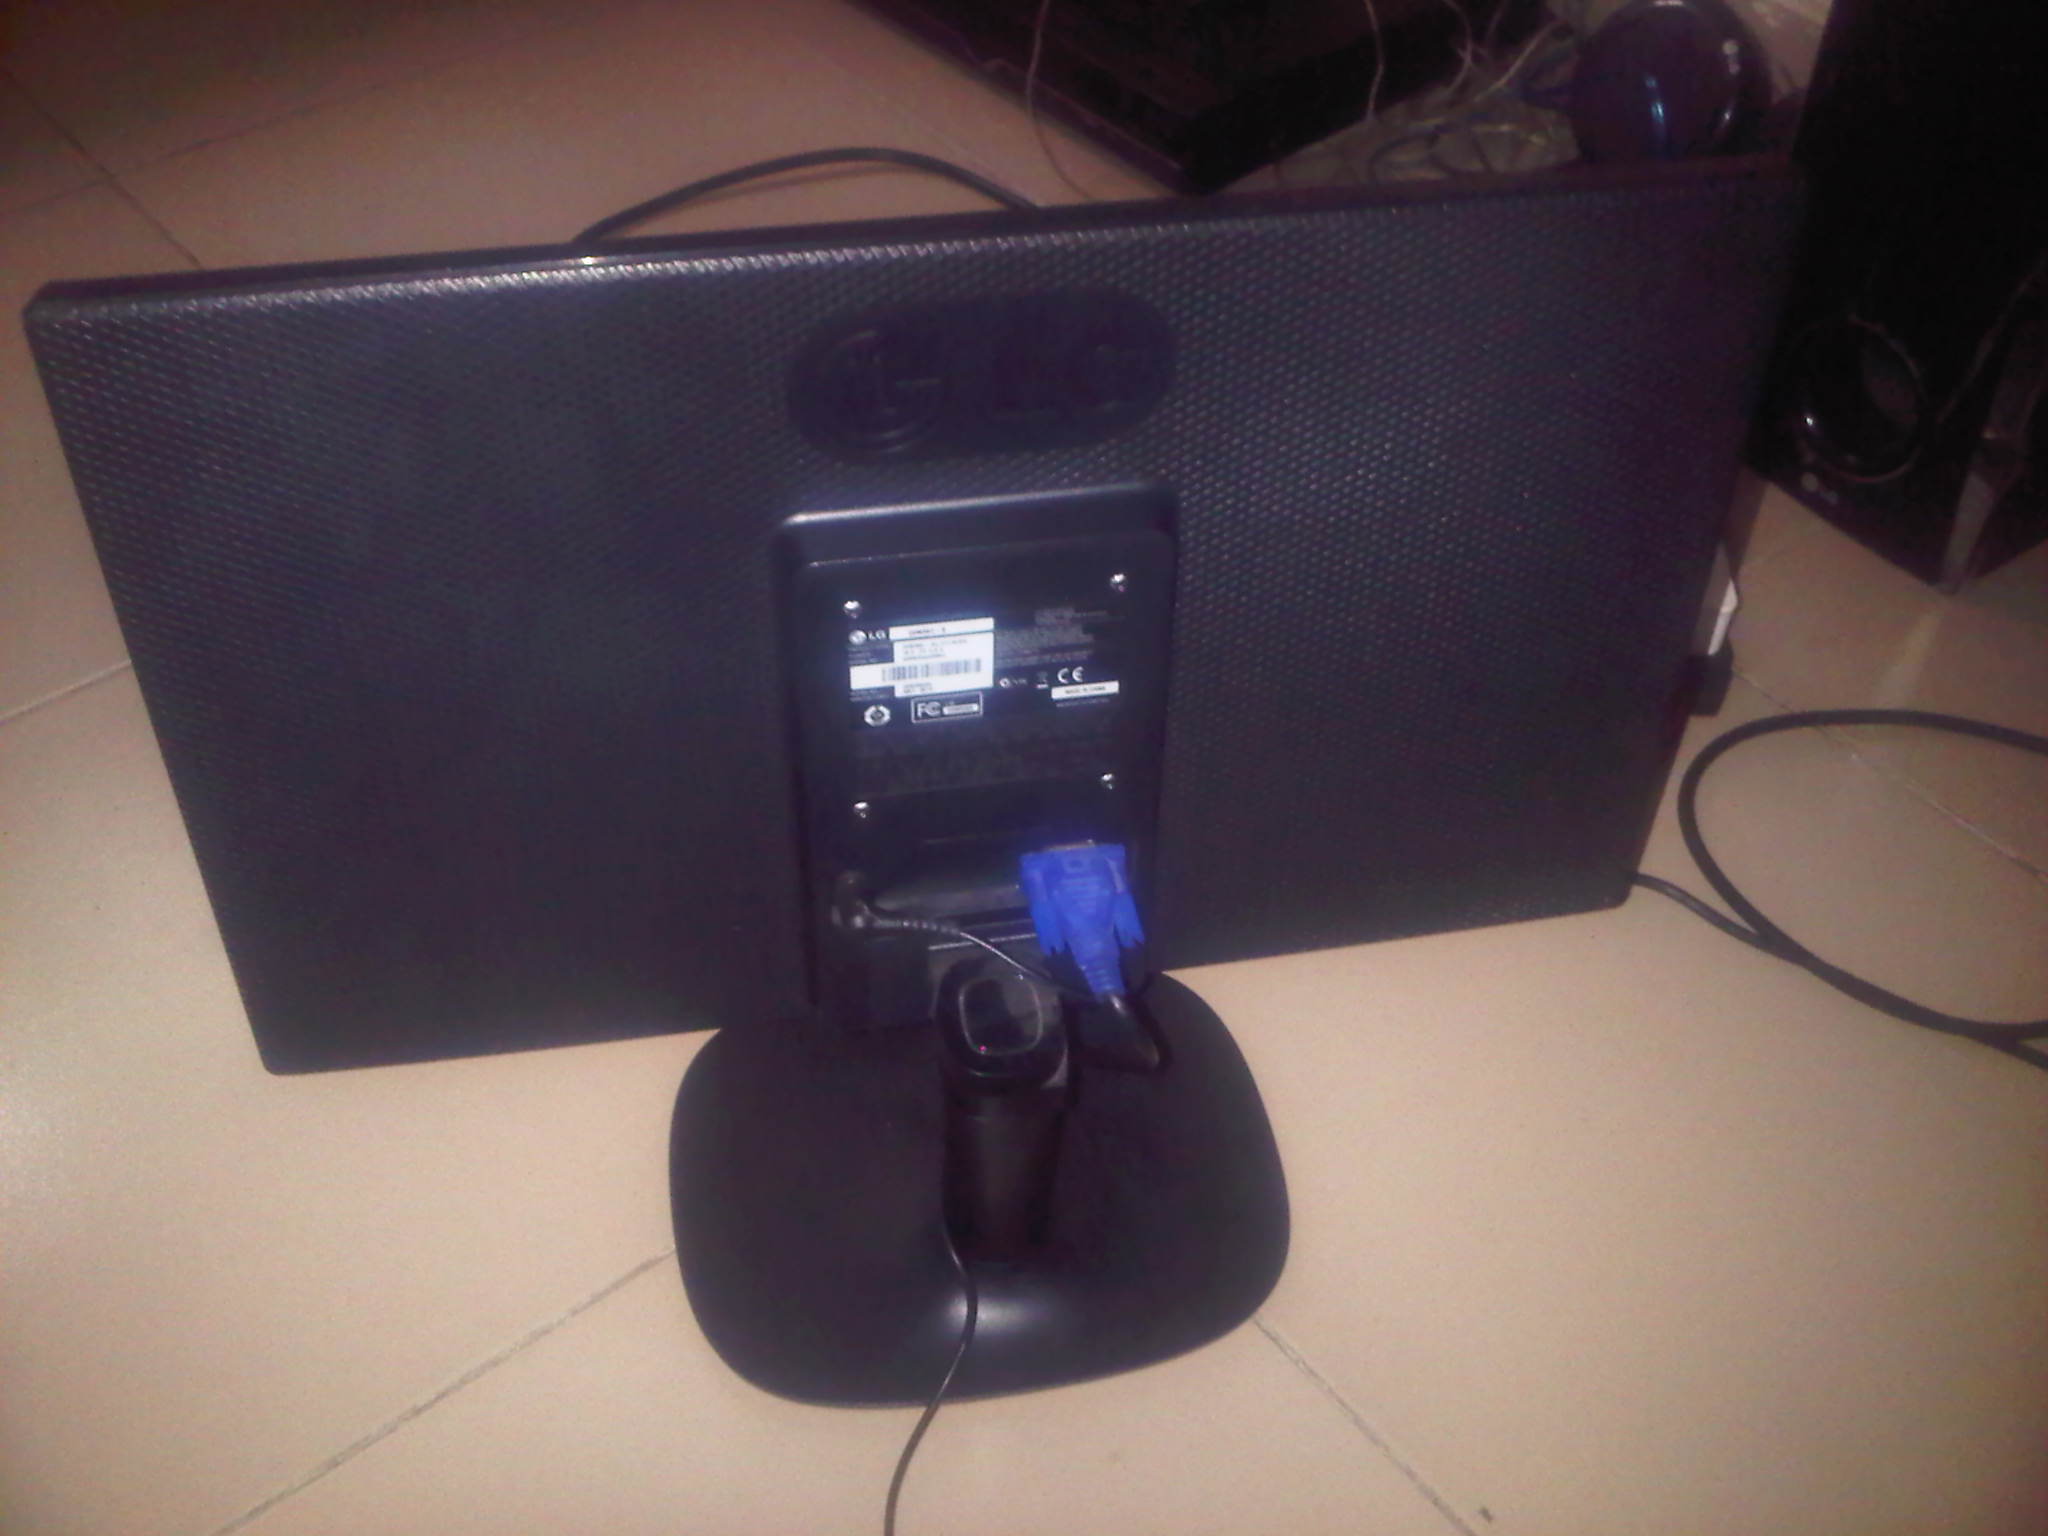 LG 20M35 LED 20 Inch Desktop For Sell@18k Only - Technology Market - Nigeria